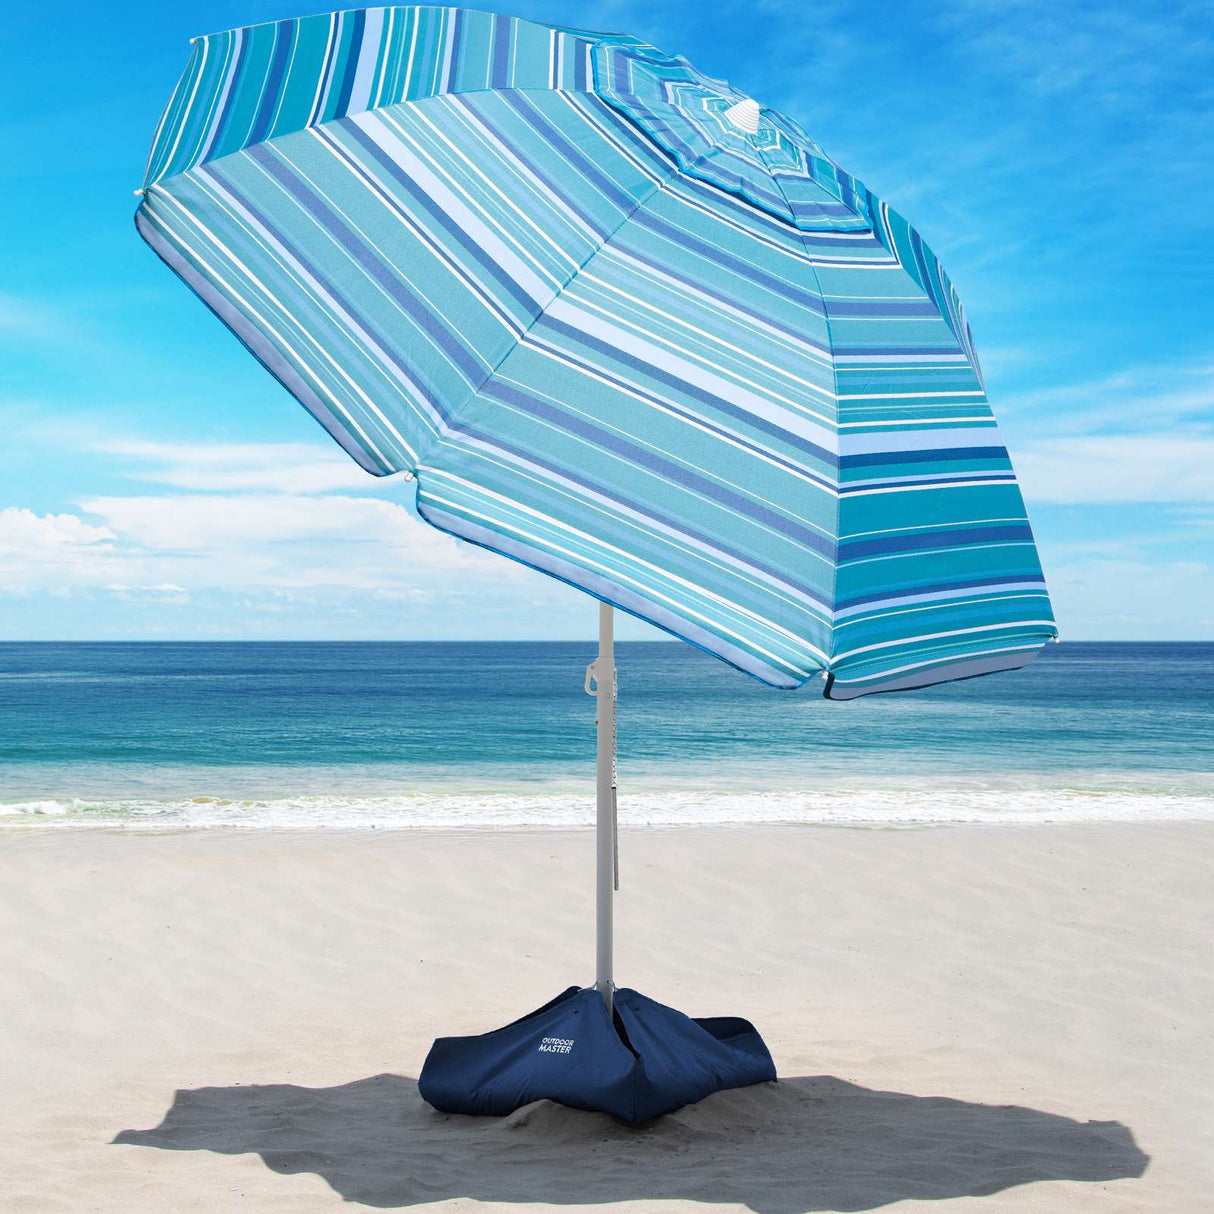 Replacement Storage Bag for Beach Umbrella